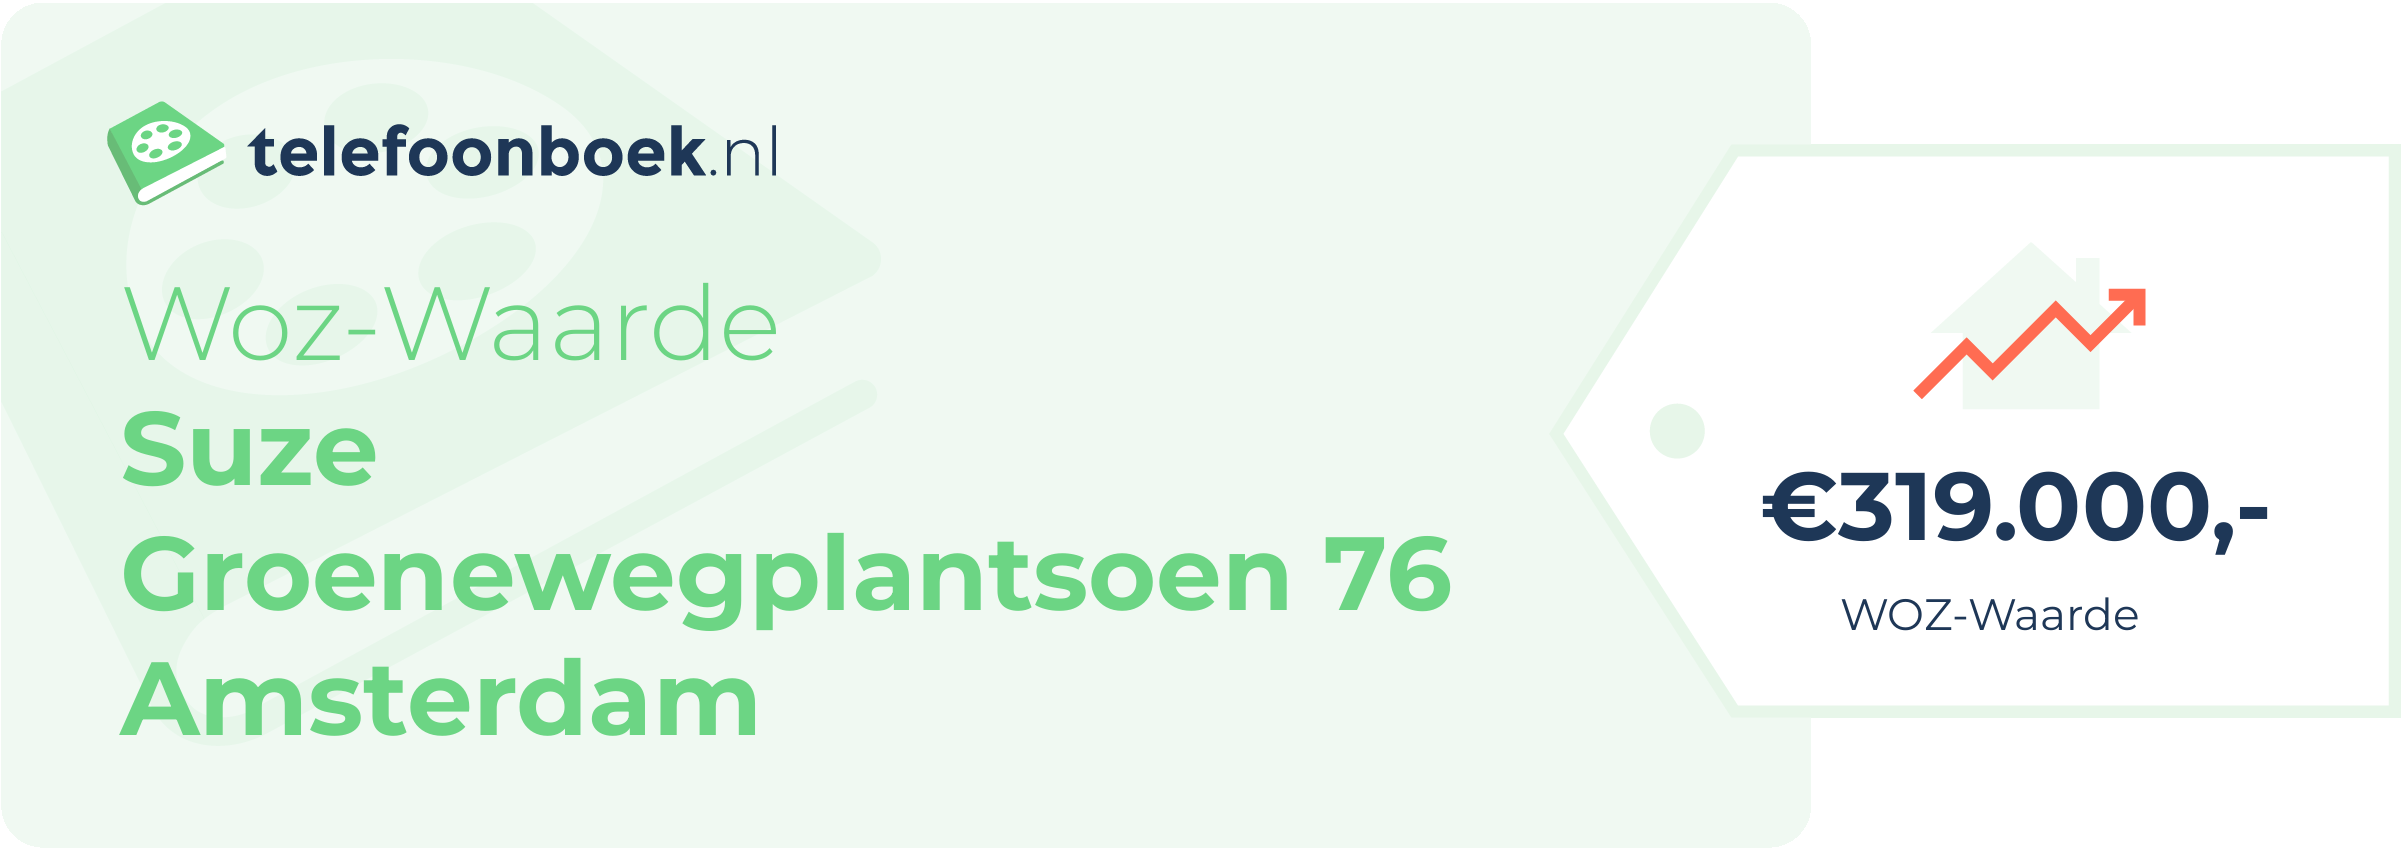 WOZ-waarde Suze Groenewegplantsoen 76 Amsterdam